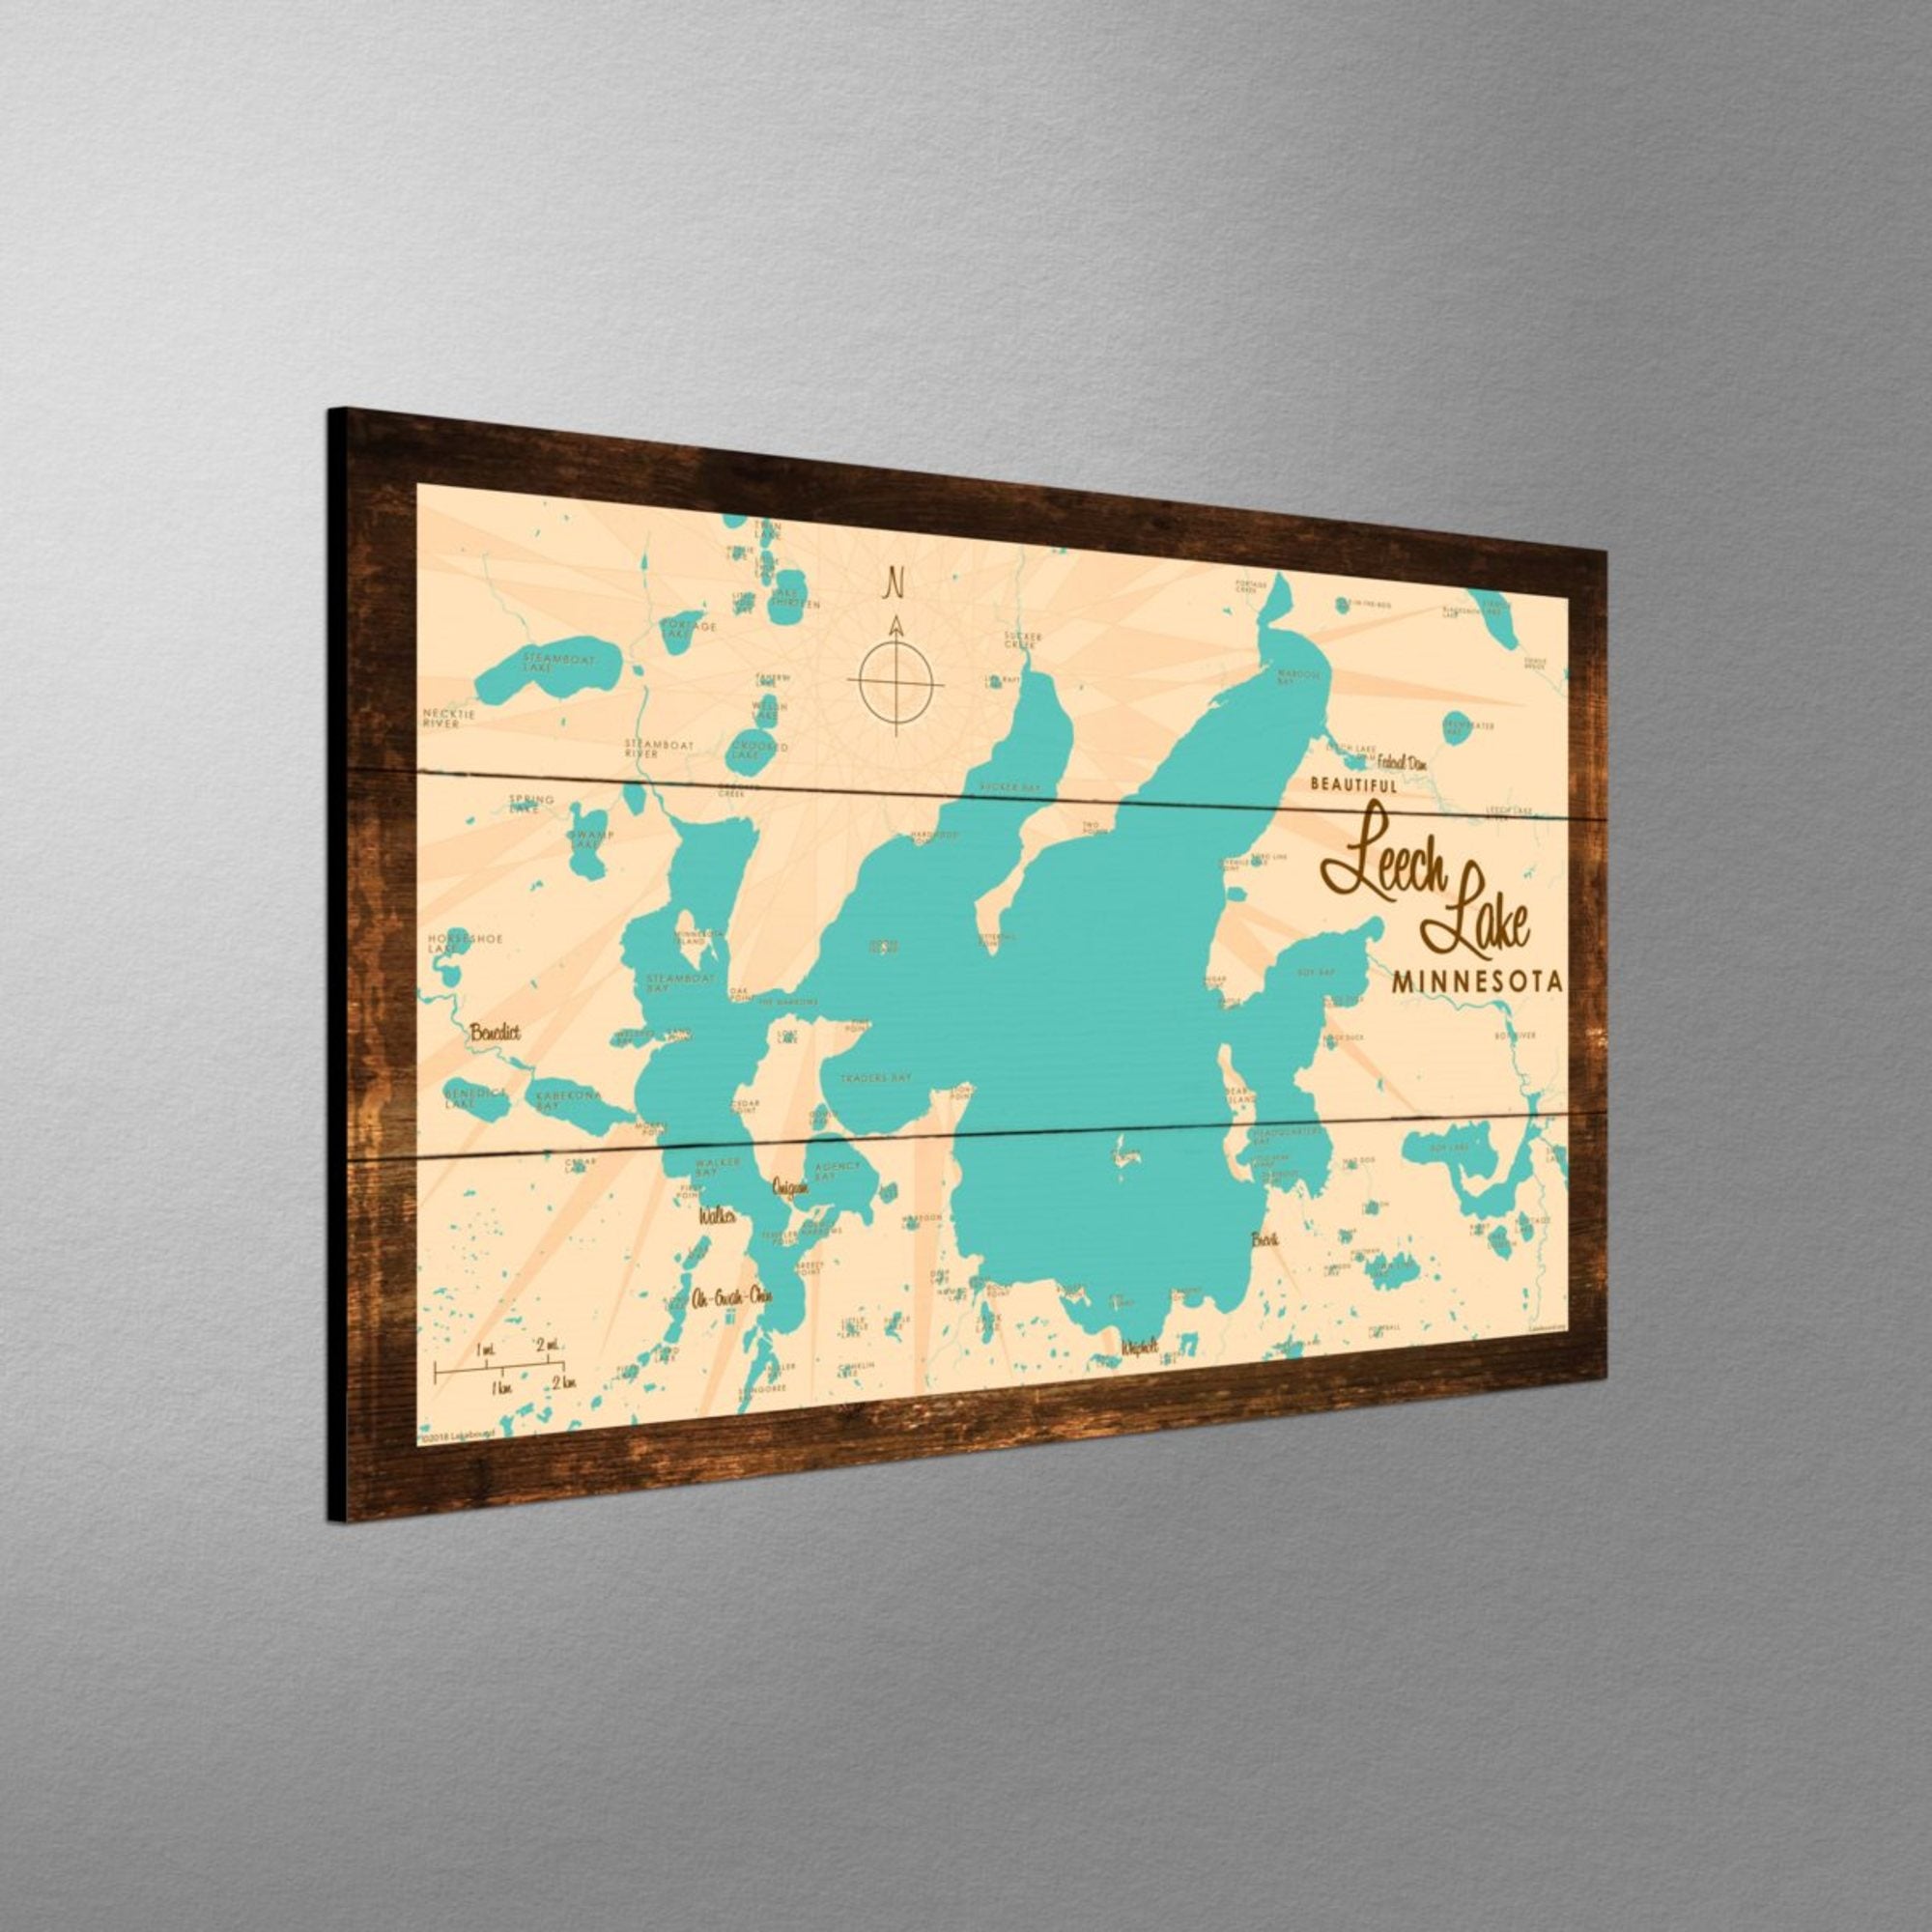 Leech Lake Minnesota, Rustic Wood Sign Map Art